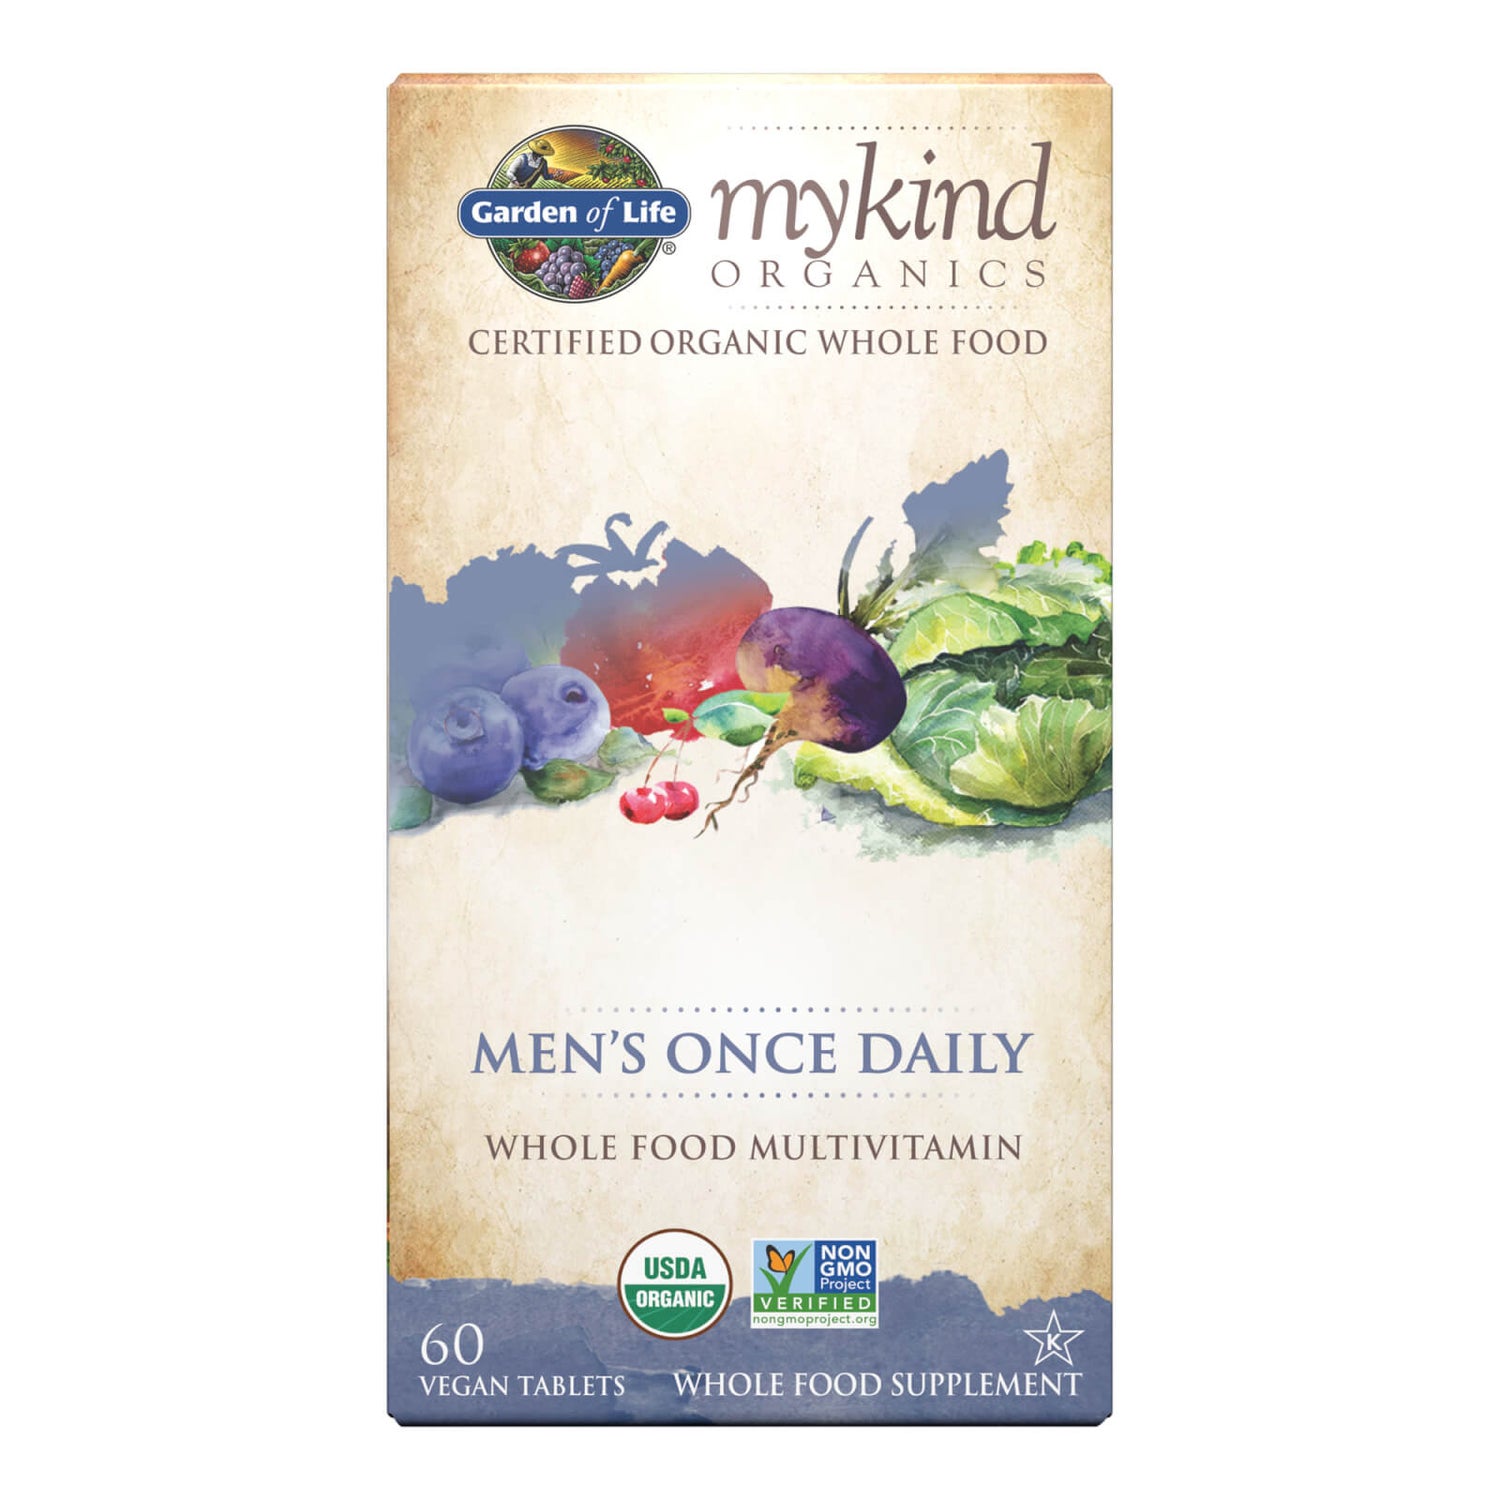 mykind Organics Men's Once Daily - 60 tabletas